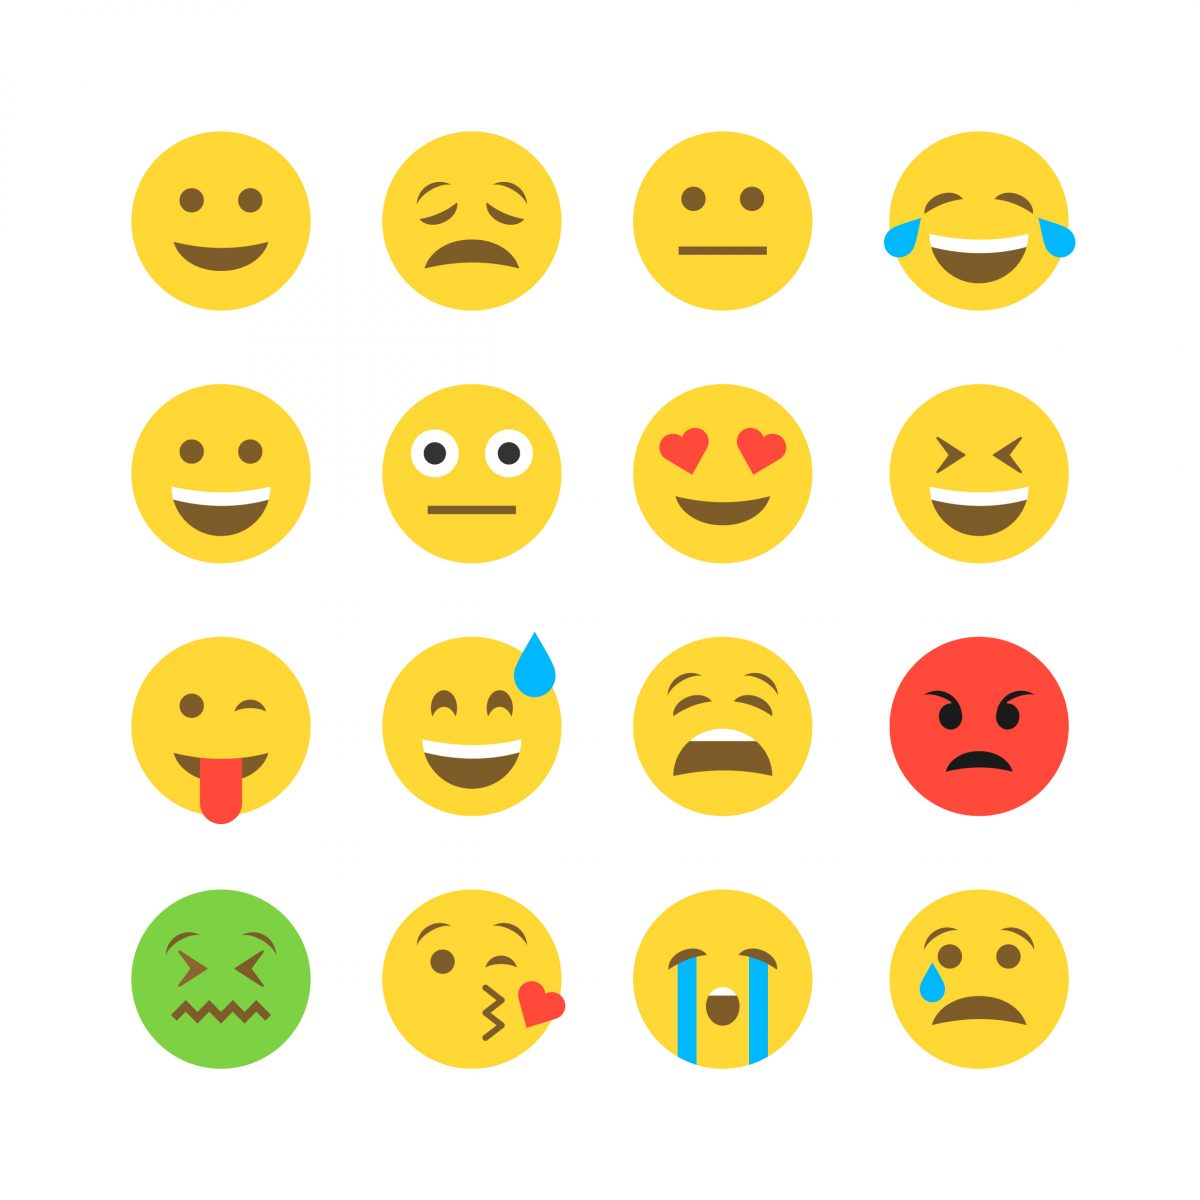 Are Emojis Emoticons